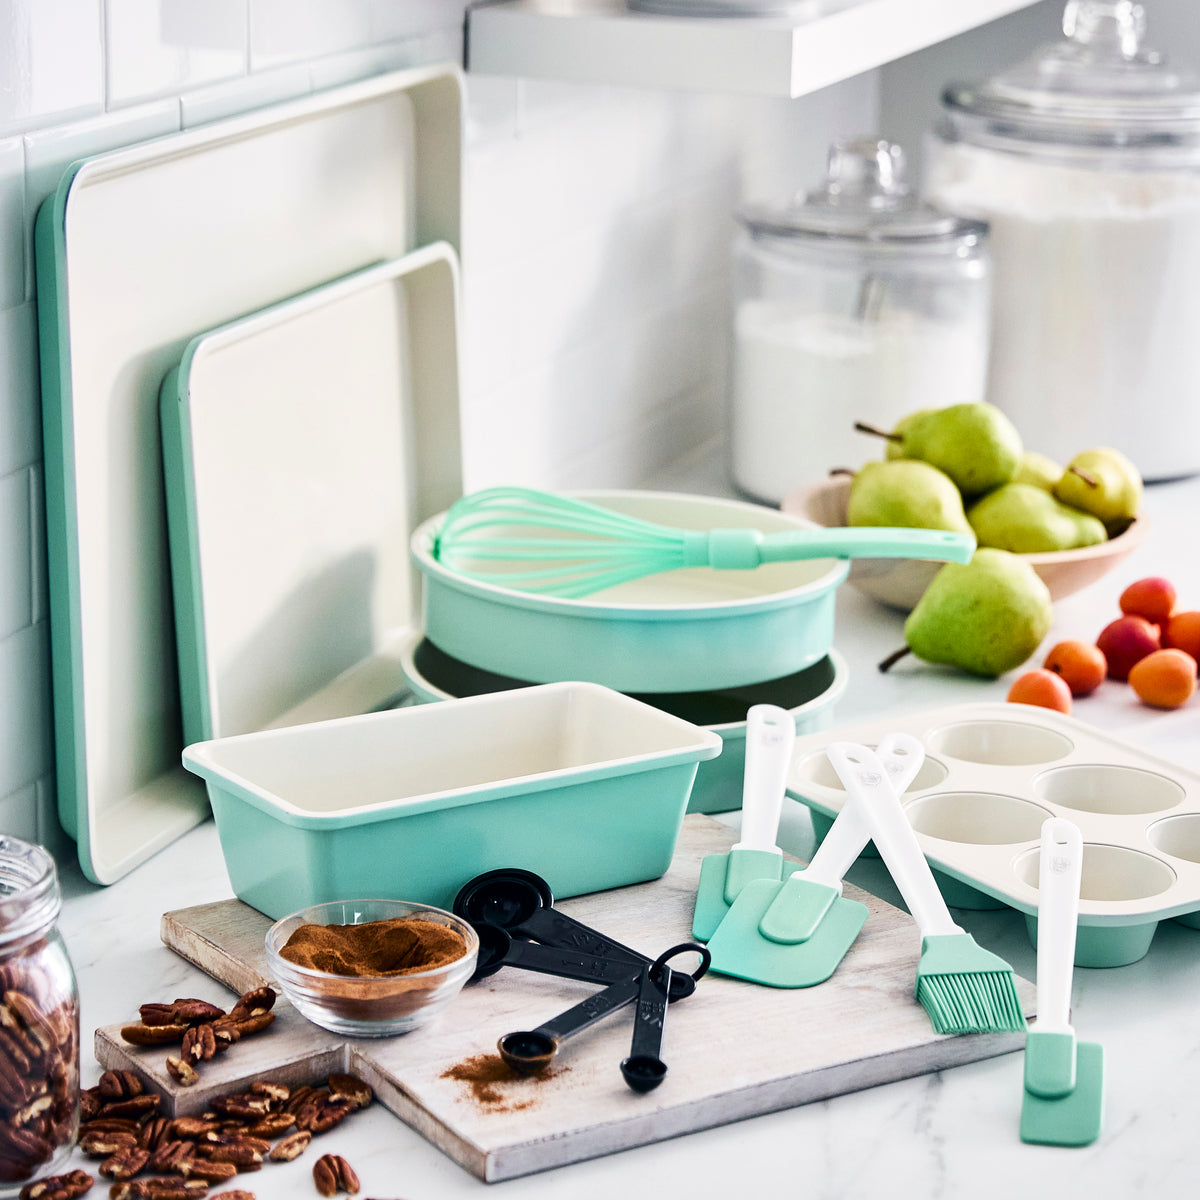 GreenLife Bakeware Ceramic Baking Set, 12pc, Turquoise